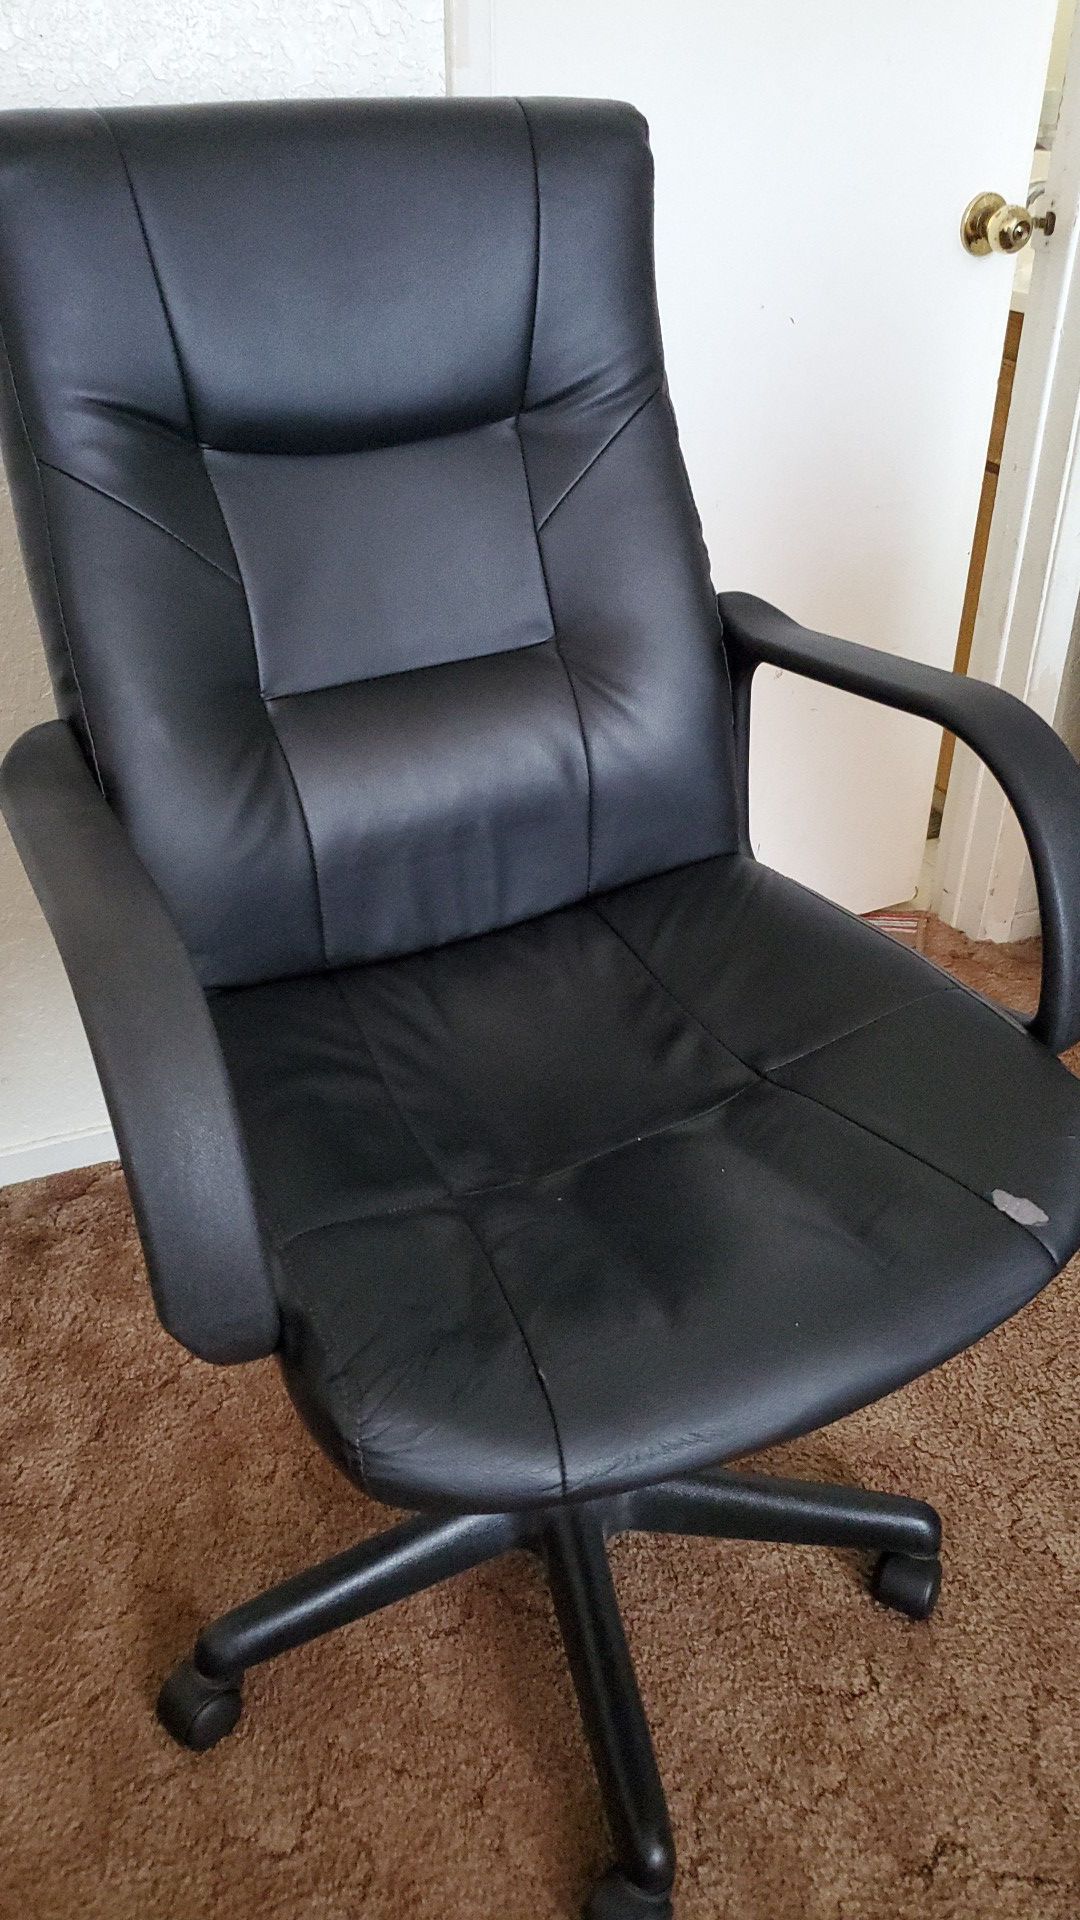 Computer chair 2